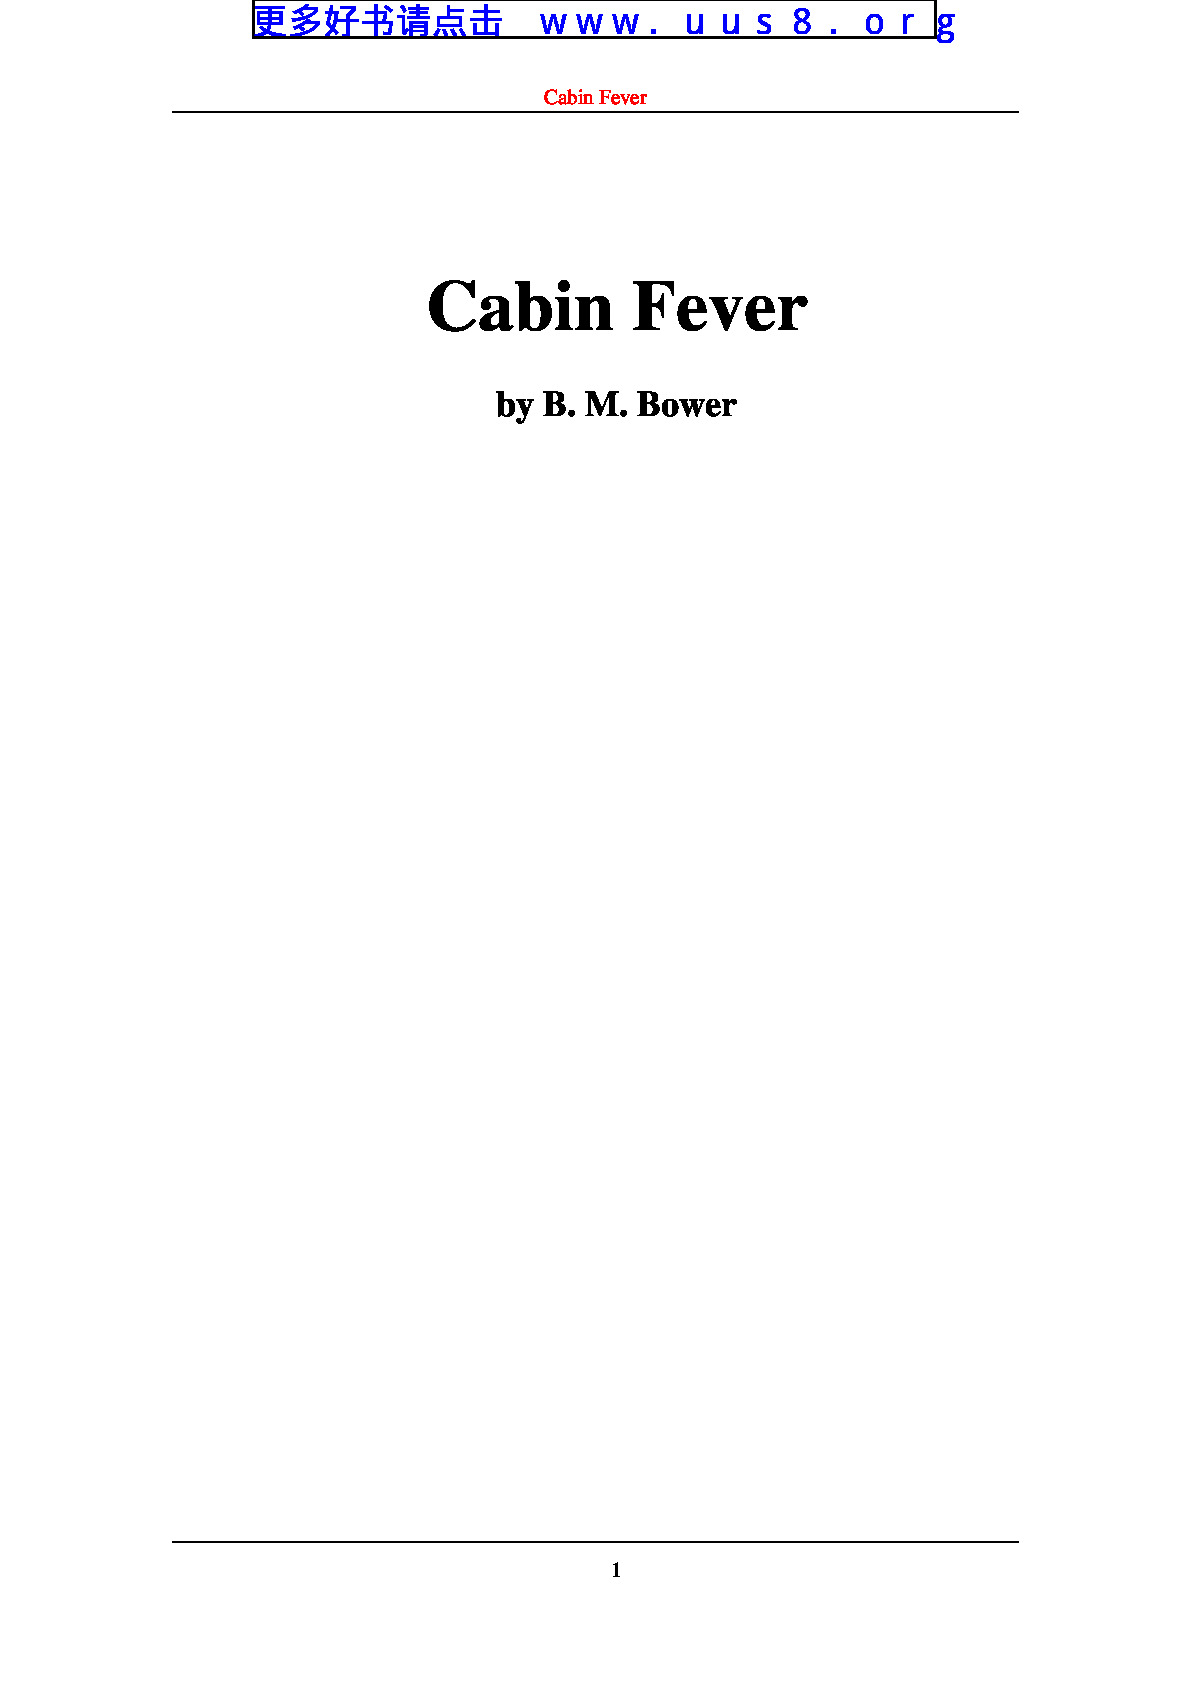 Cabin_Fever(卡宾·弗瓦)